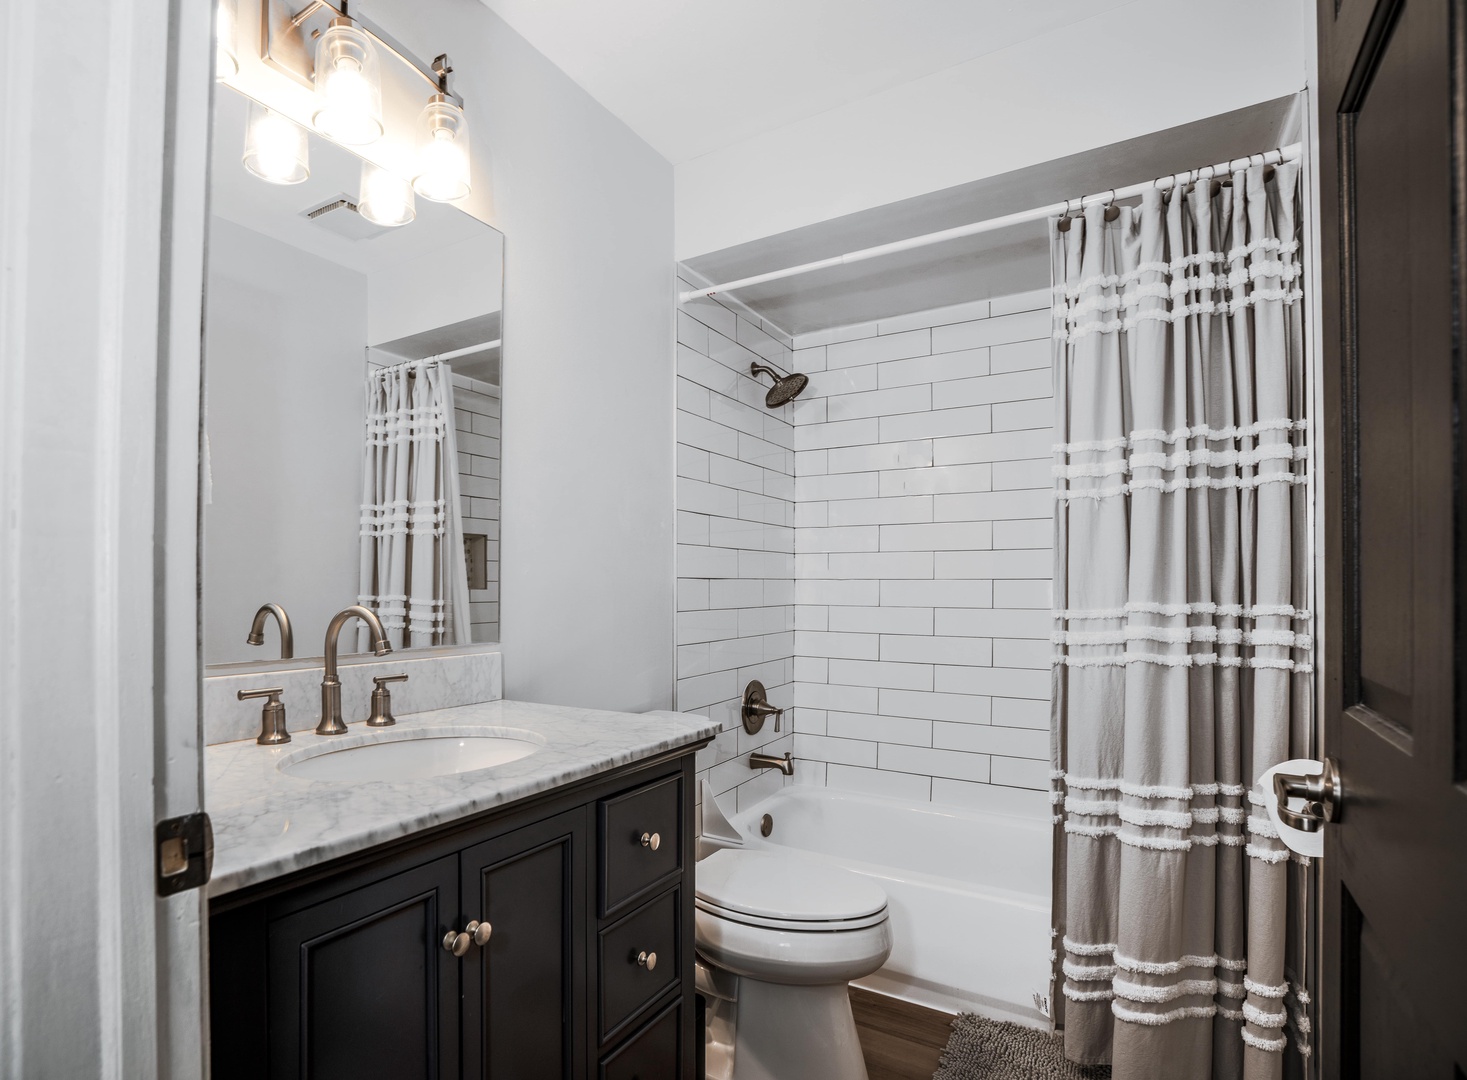 The full bath features a sleek single vanity & shower/tub combo